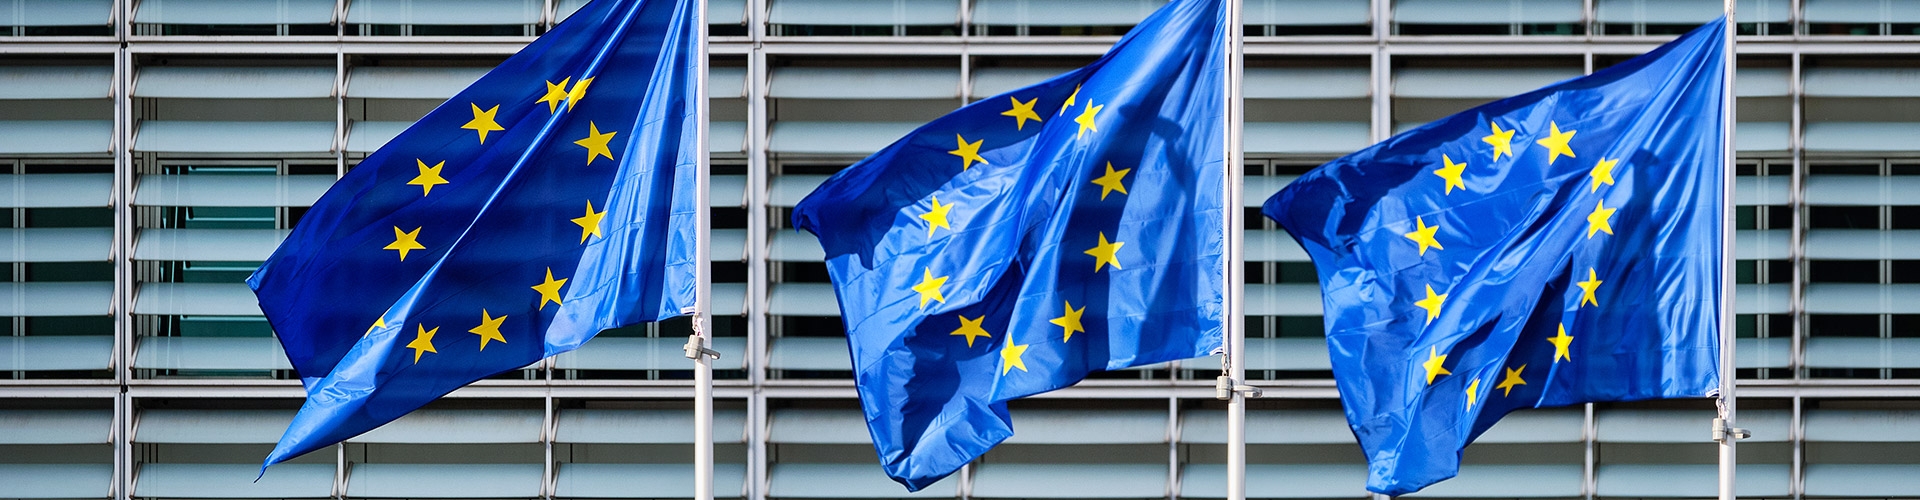 Banderas-europeas-fondos-next-generation